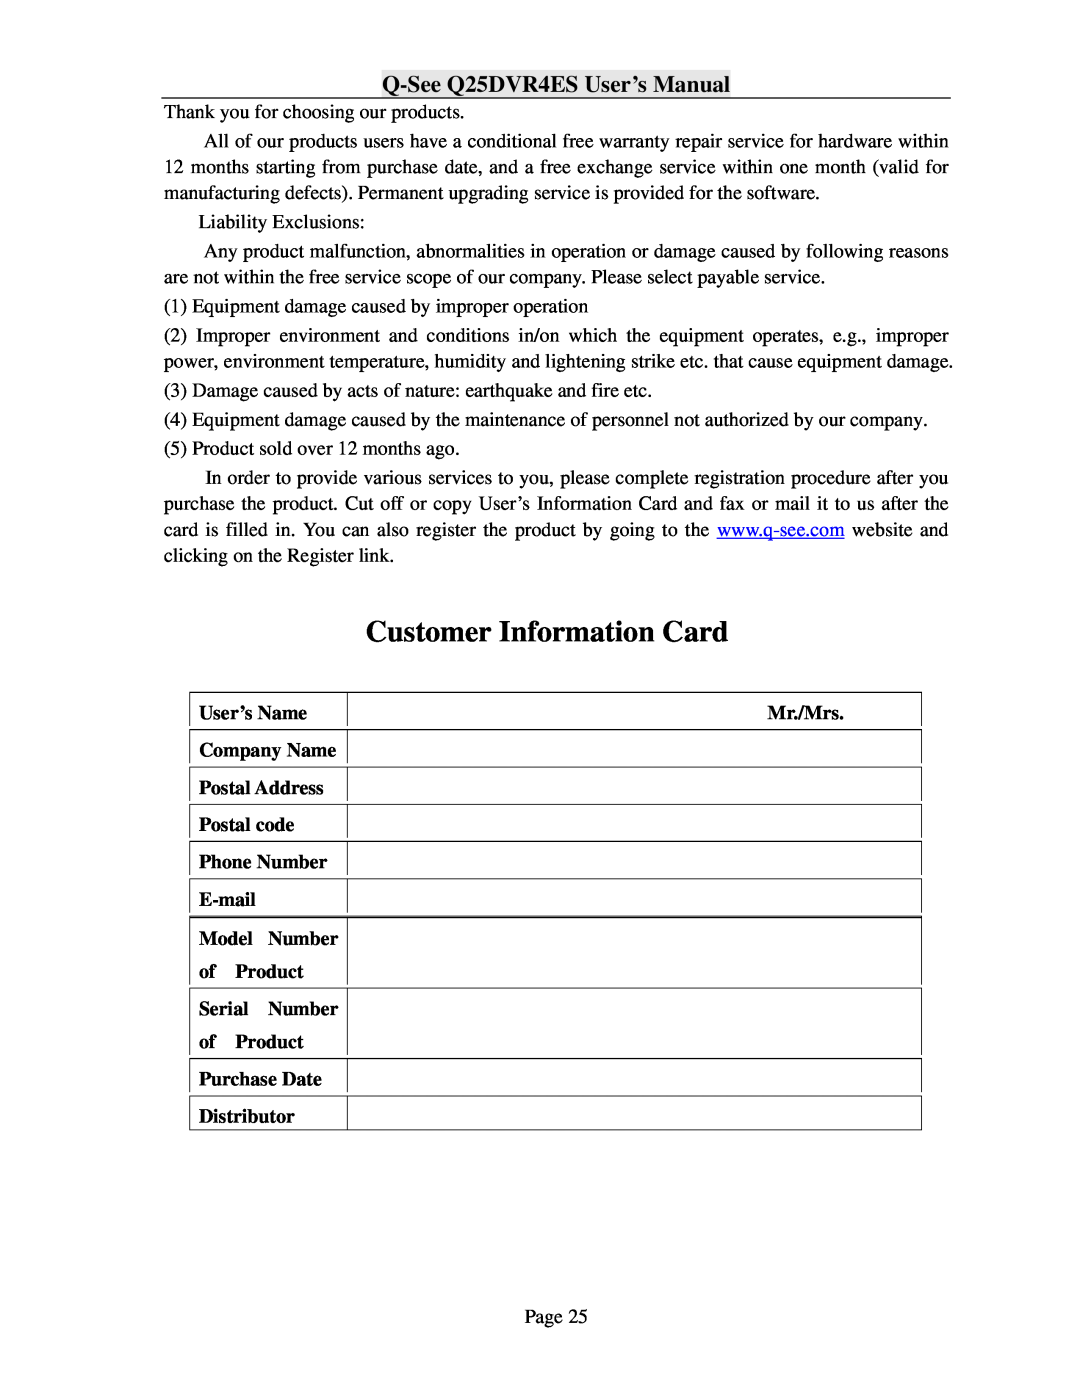 Q-See Customer Information Card, Q-SeeQ25DVR4ES User’s Manual, User’s Name Company Name Postal Address, Mr./Mrs 